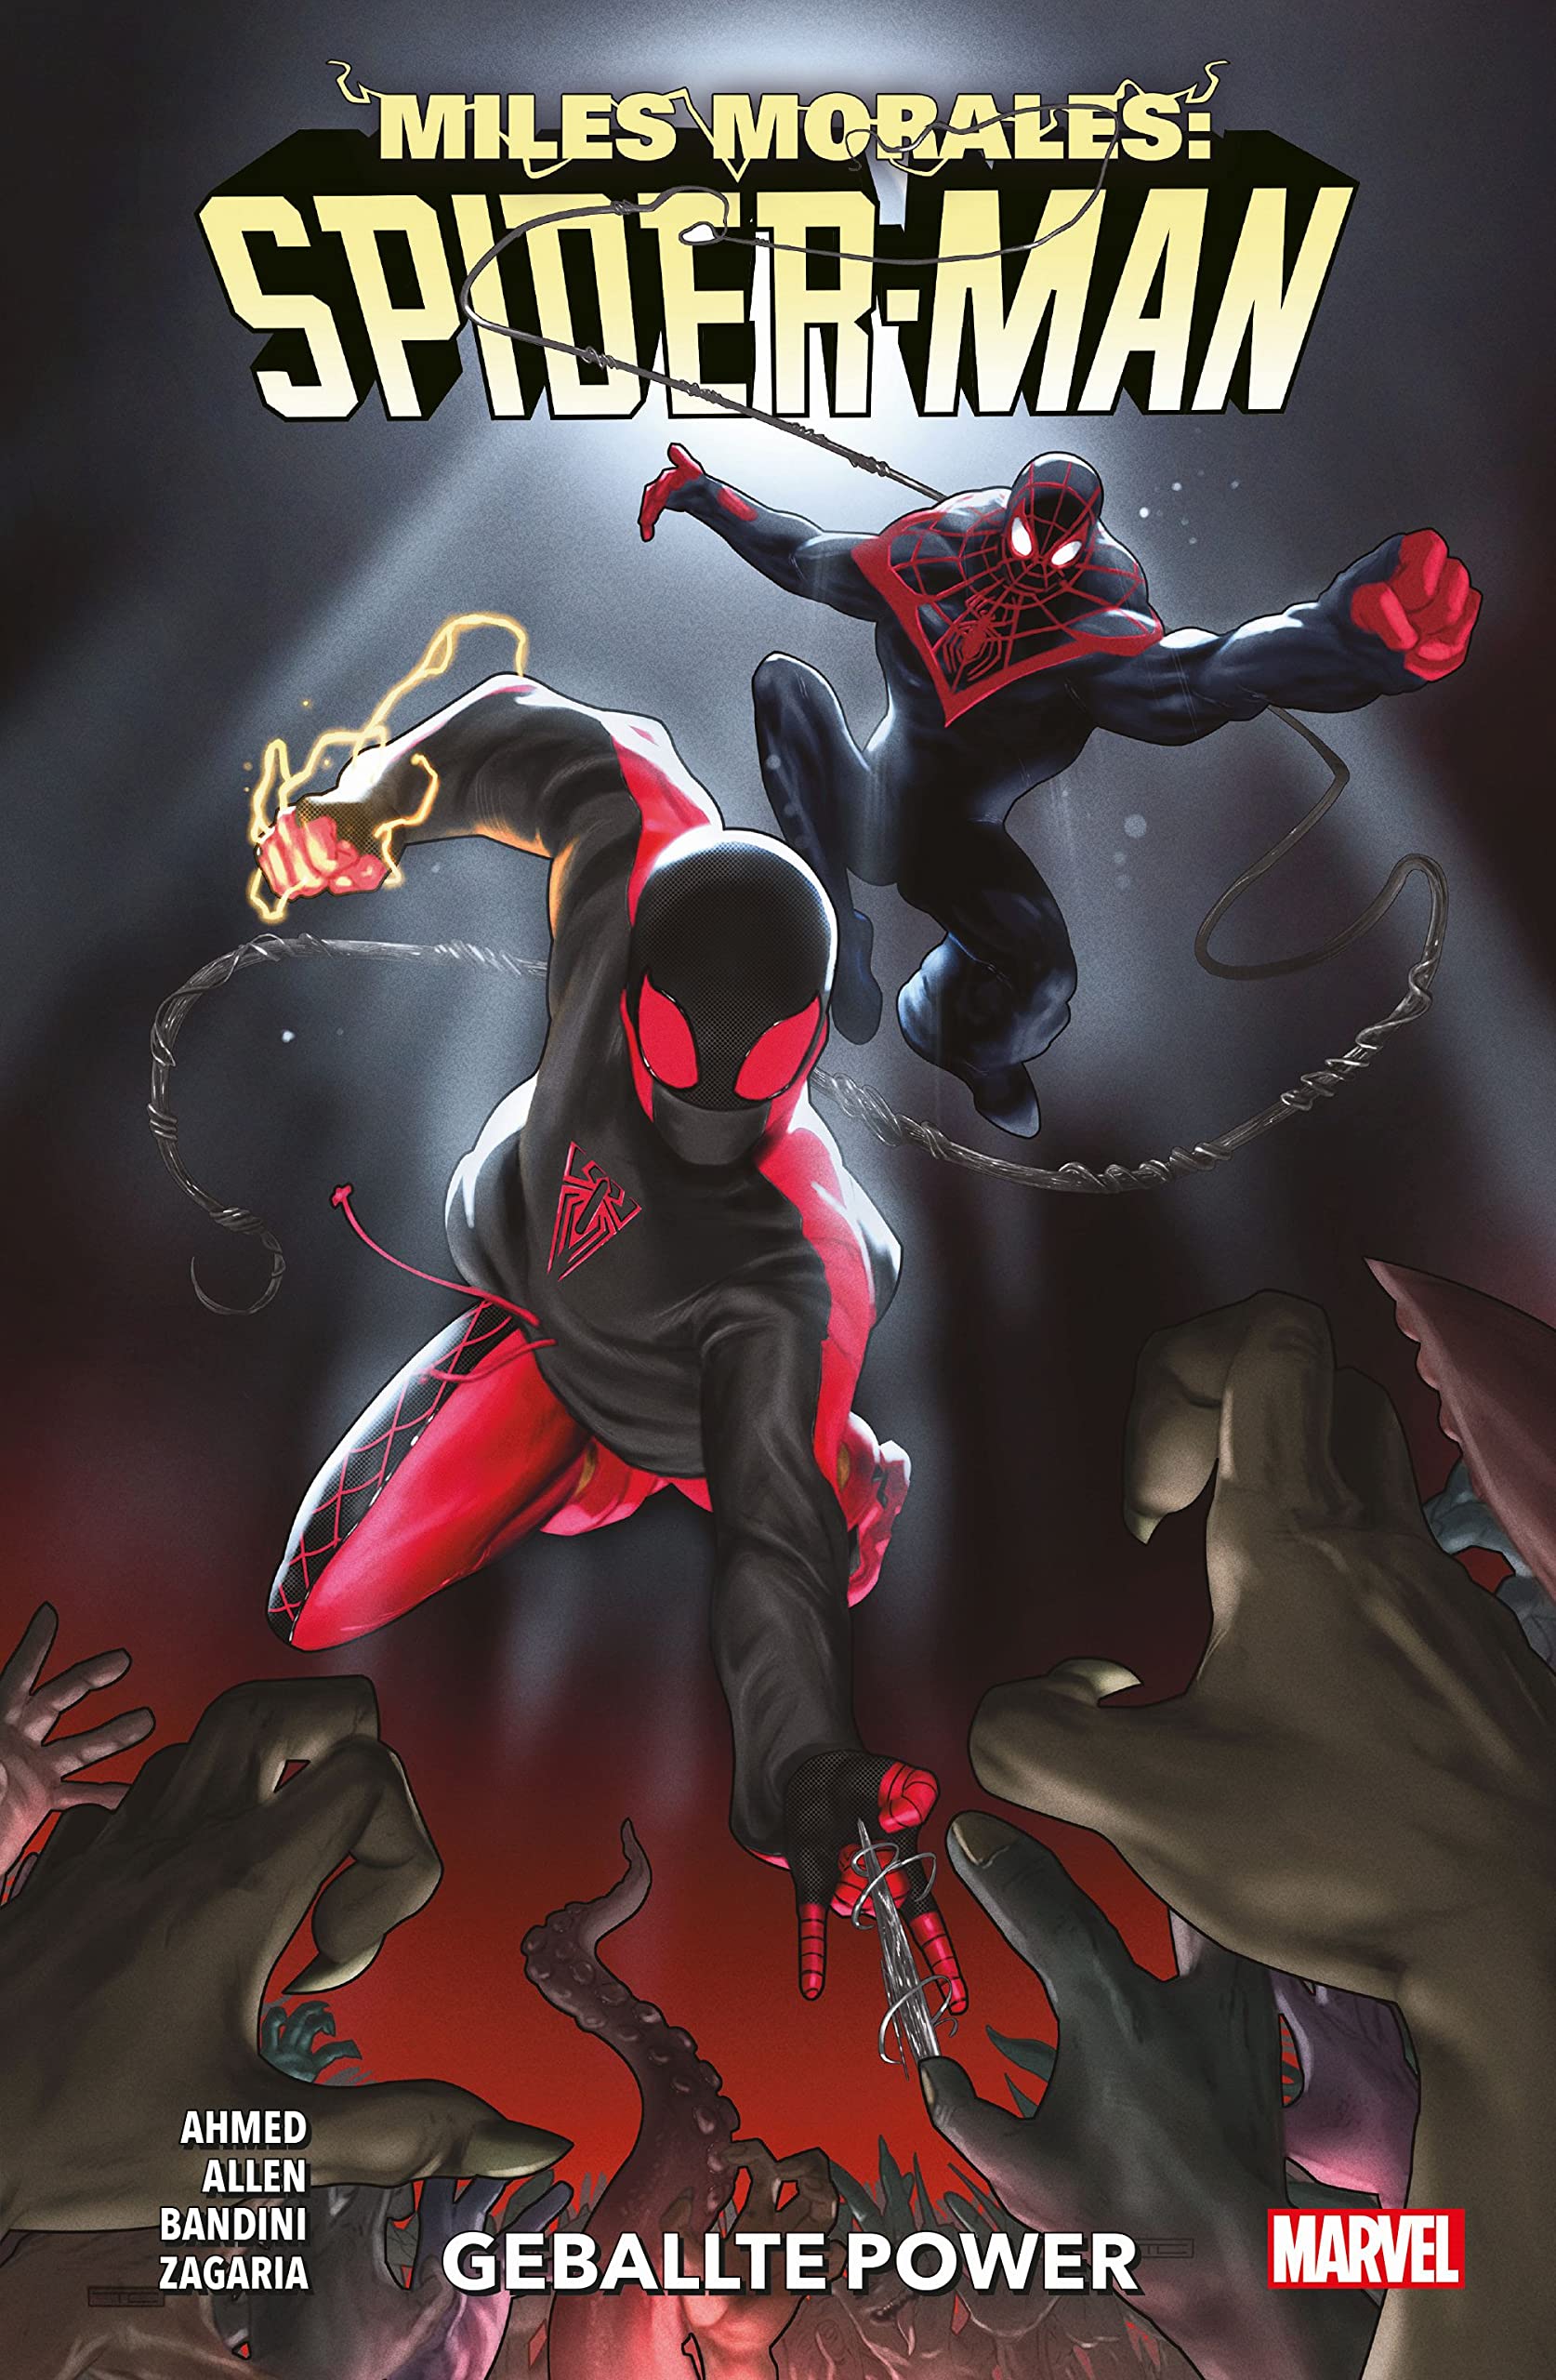 Miles Morales: Spider-Man Geballte Power